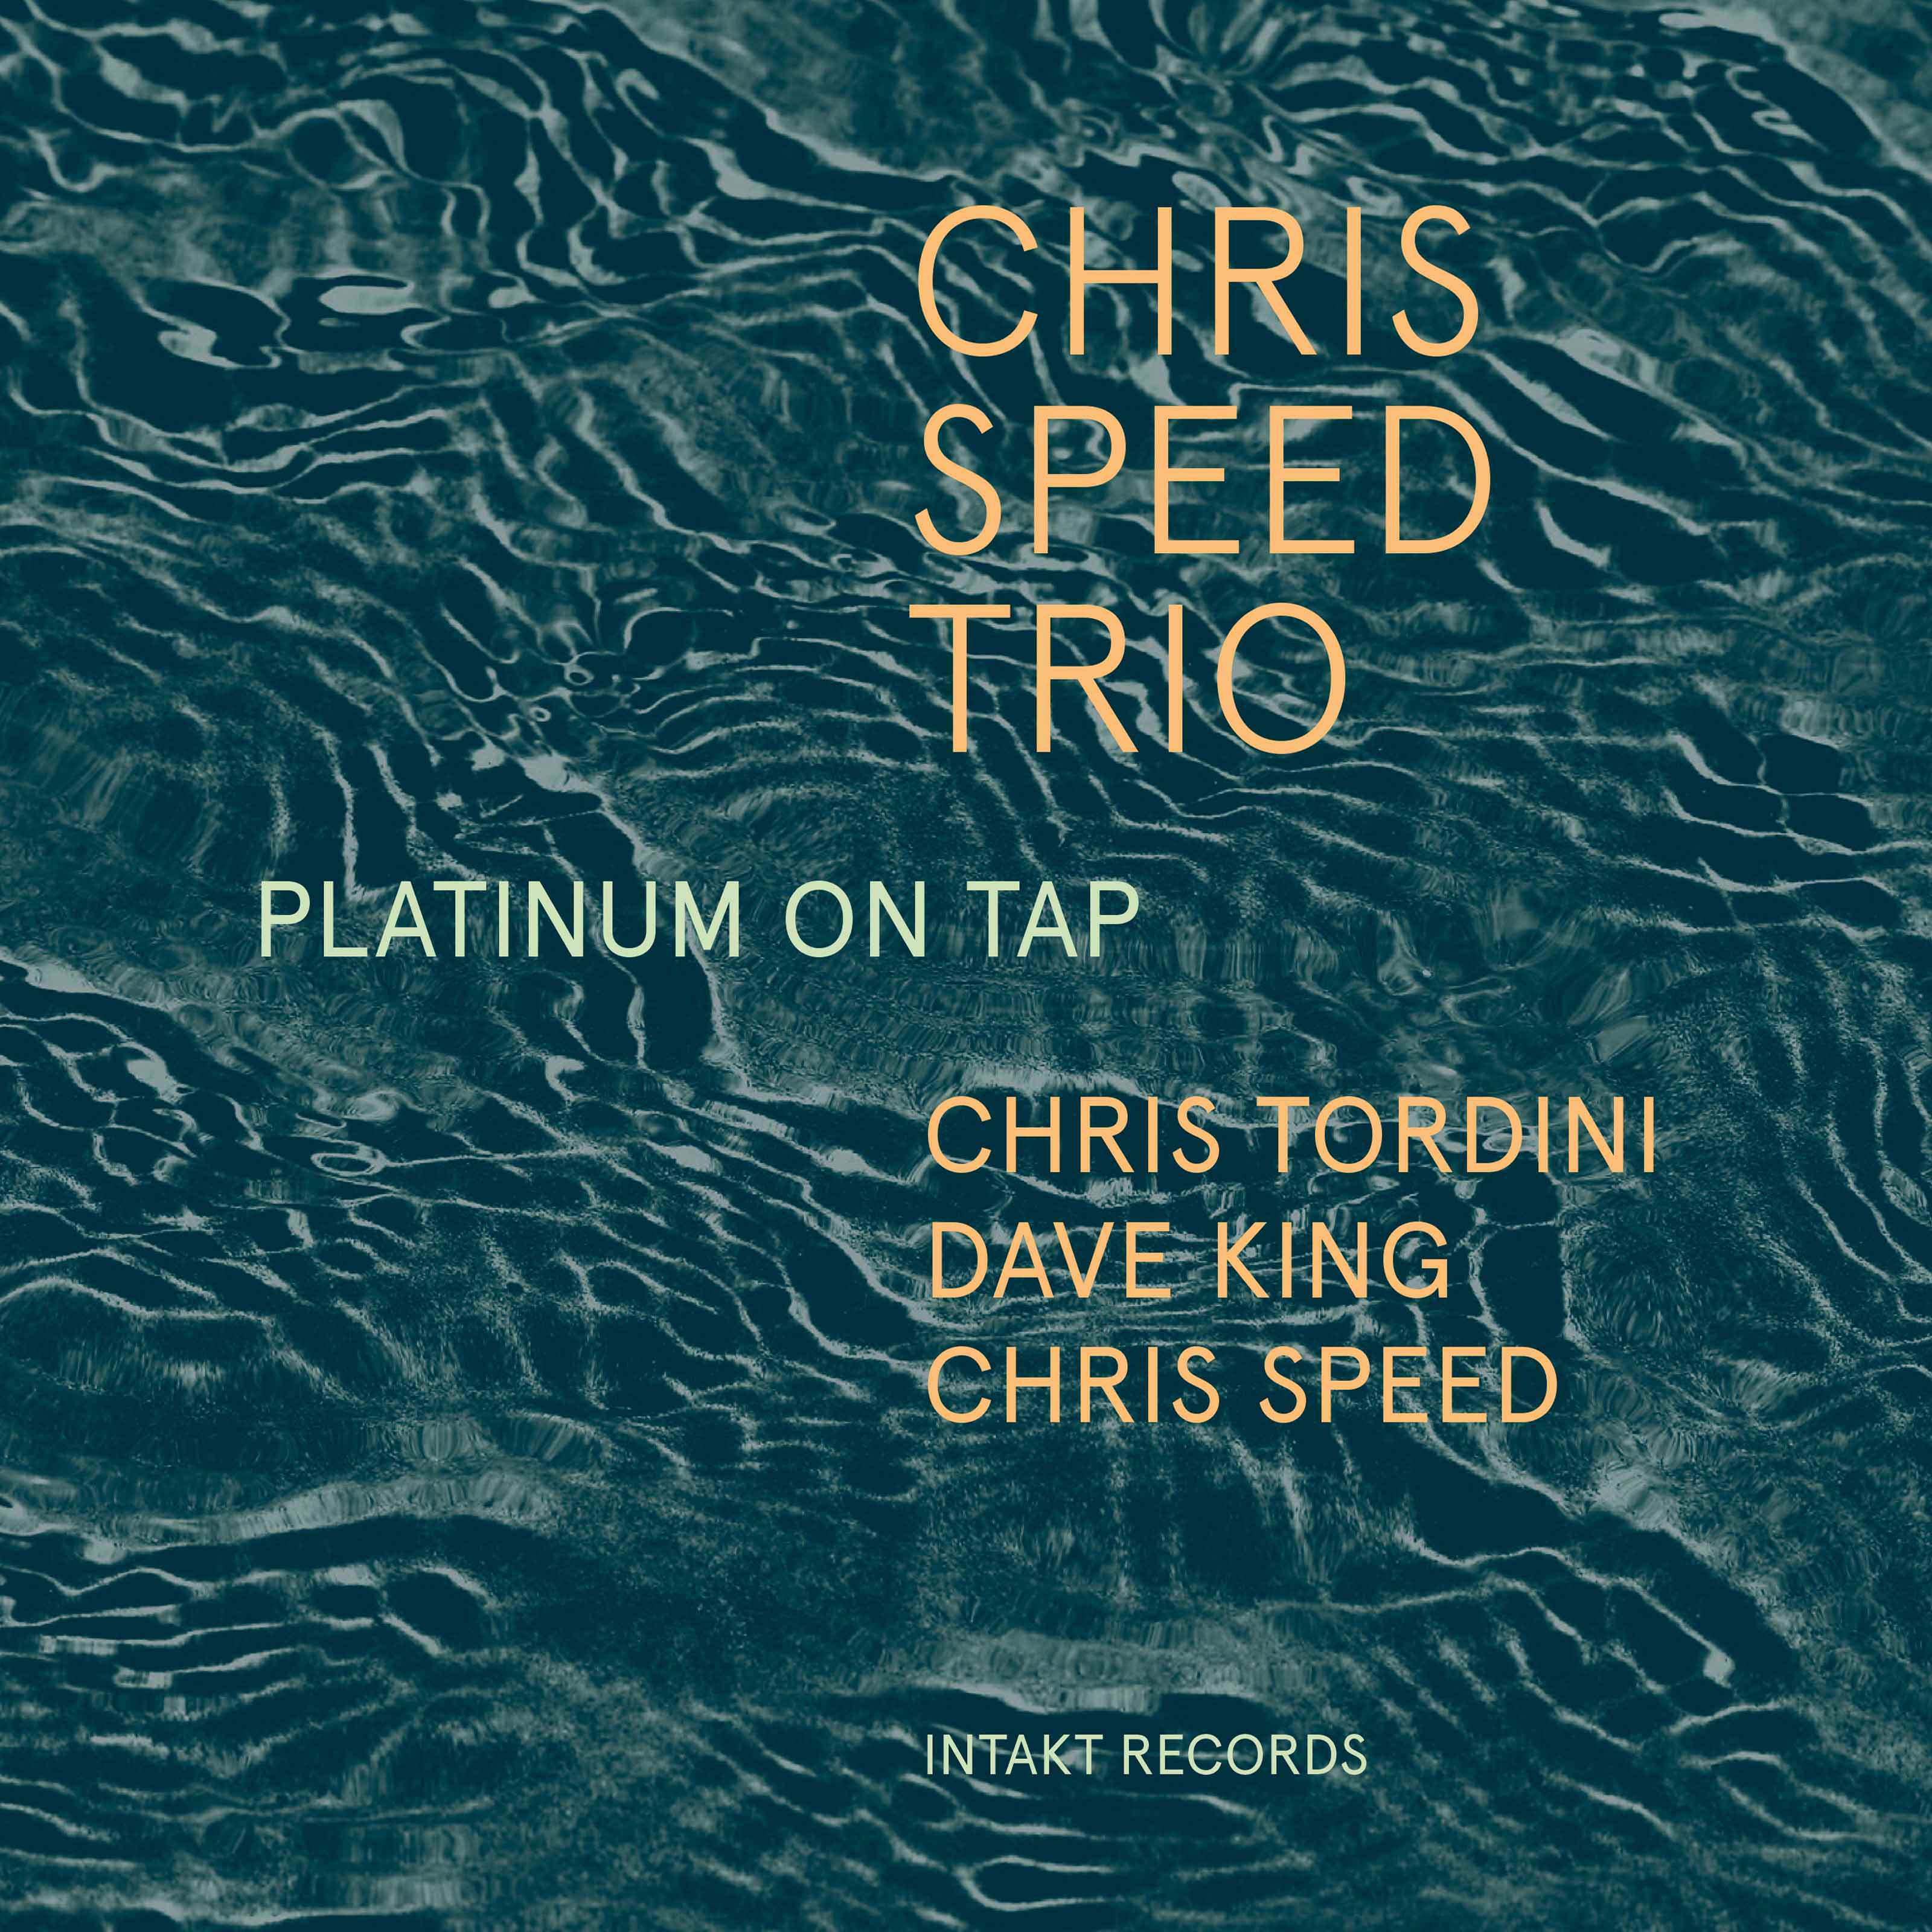 Chris Speed Trio – Platinum On Tap (2017) [HDTracks FLAC 24bit/96kHz]